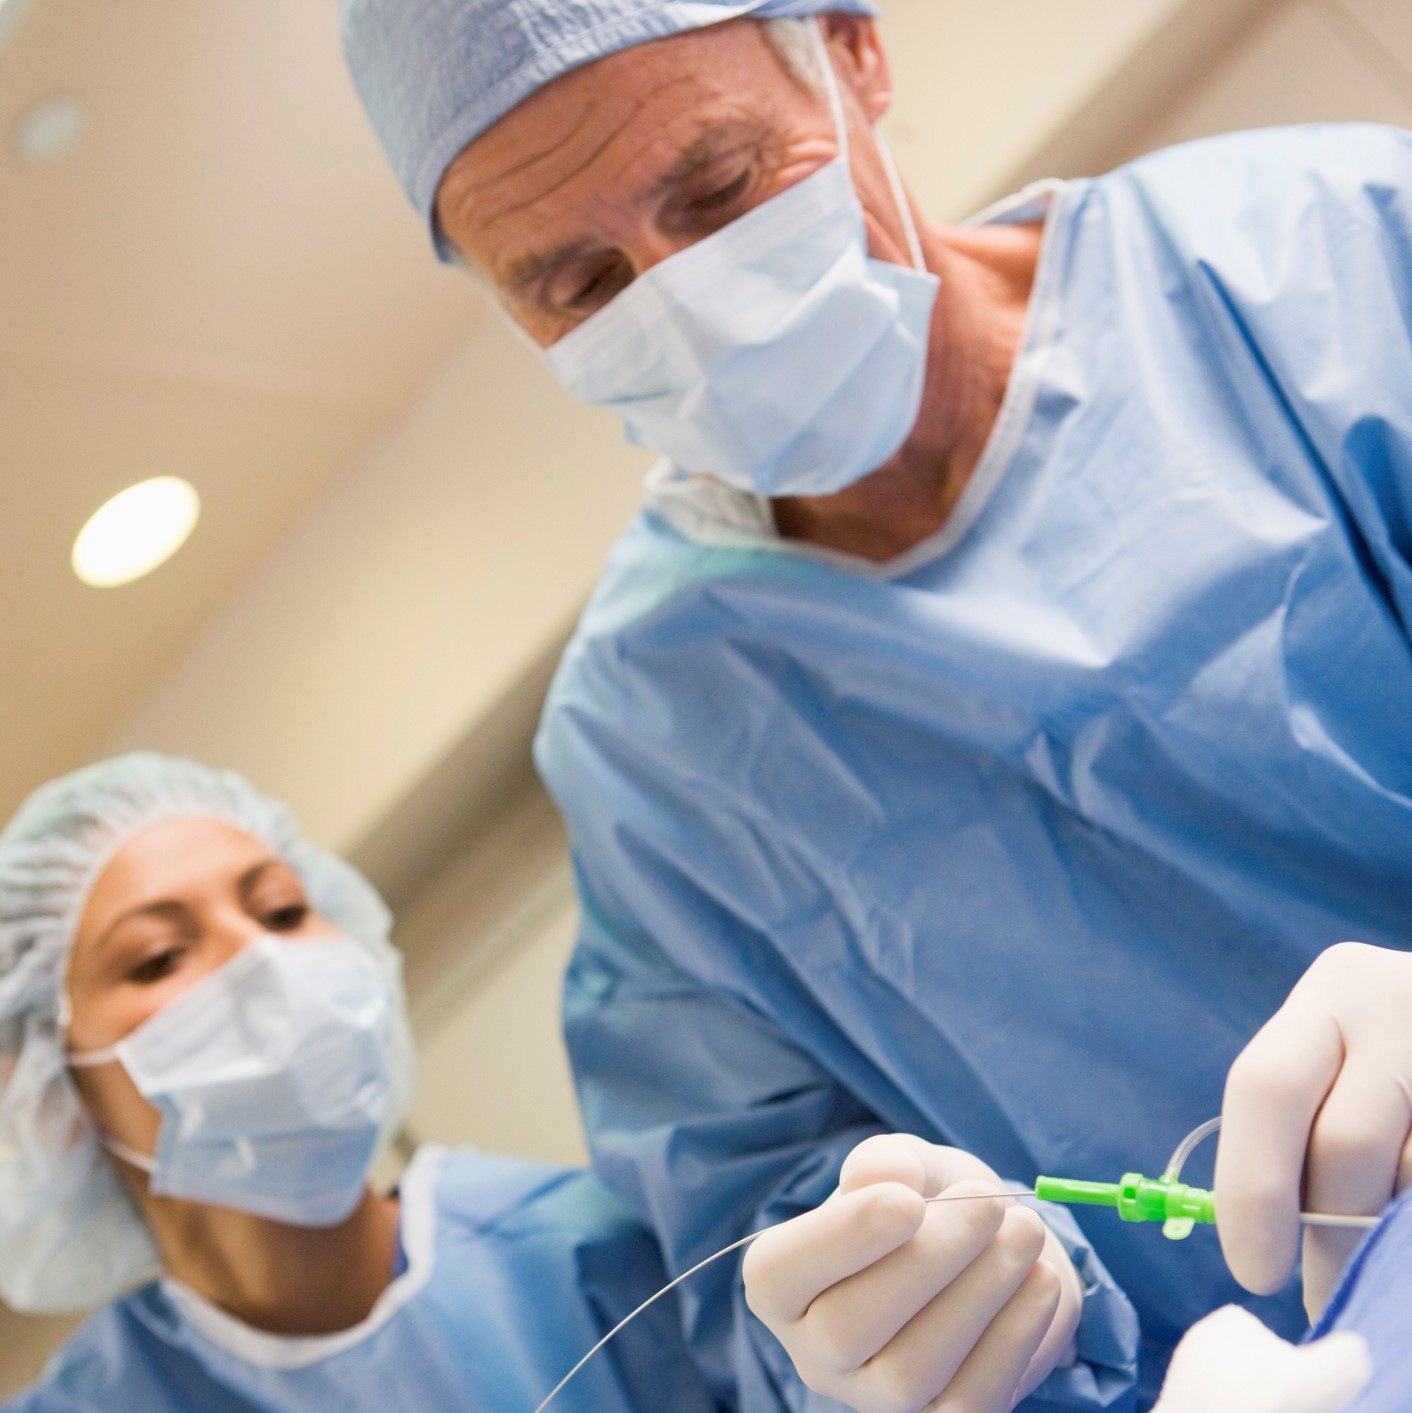 Surgeons preparing equipment for surgery